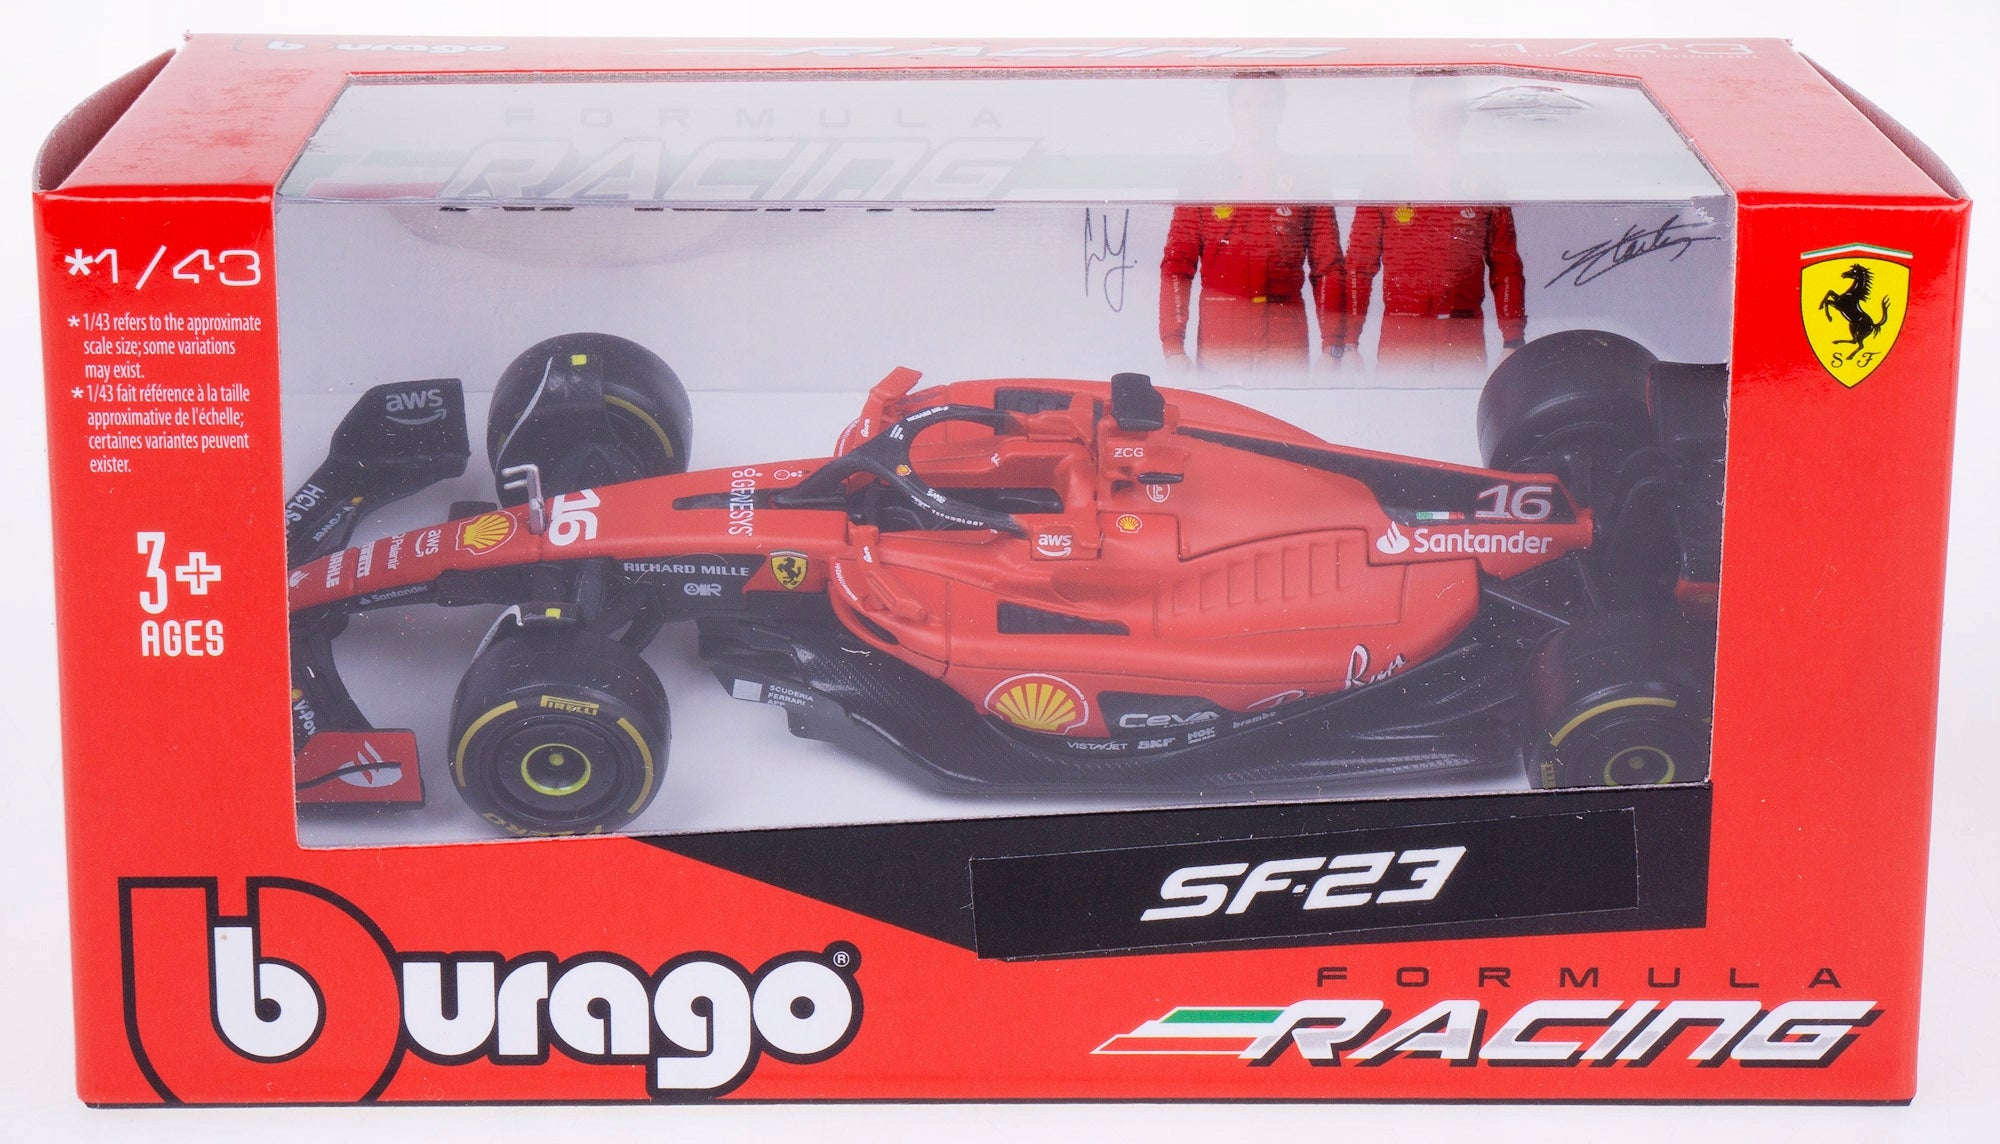 Bburago - 1:43 Ferrari Racing Asst